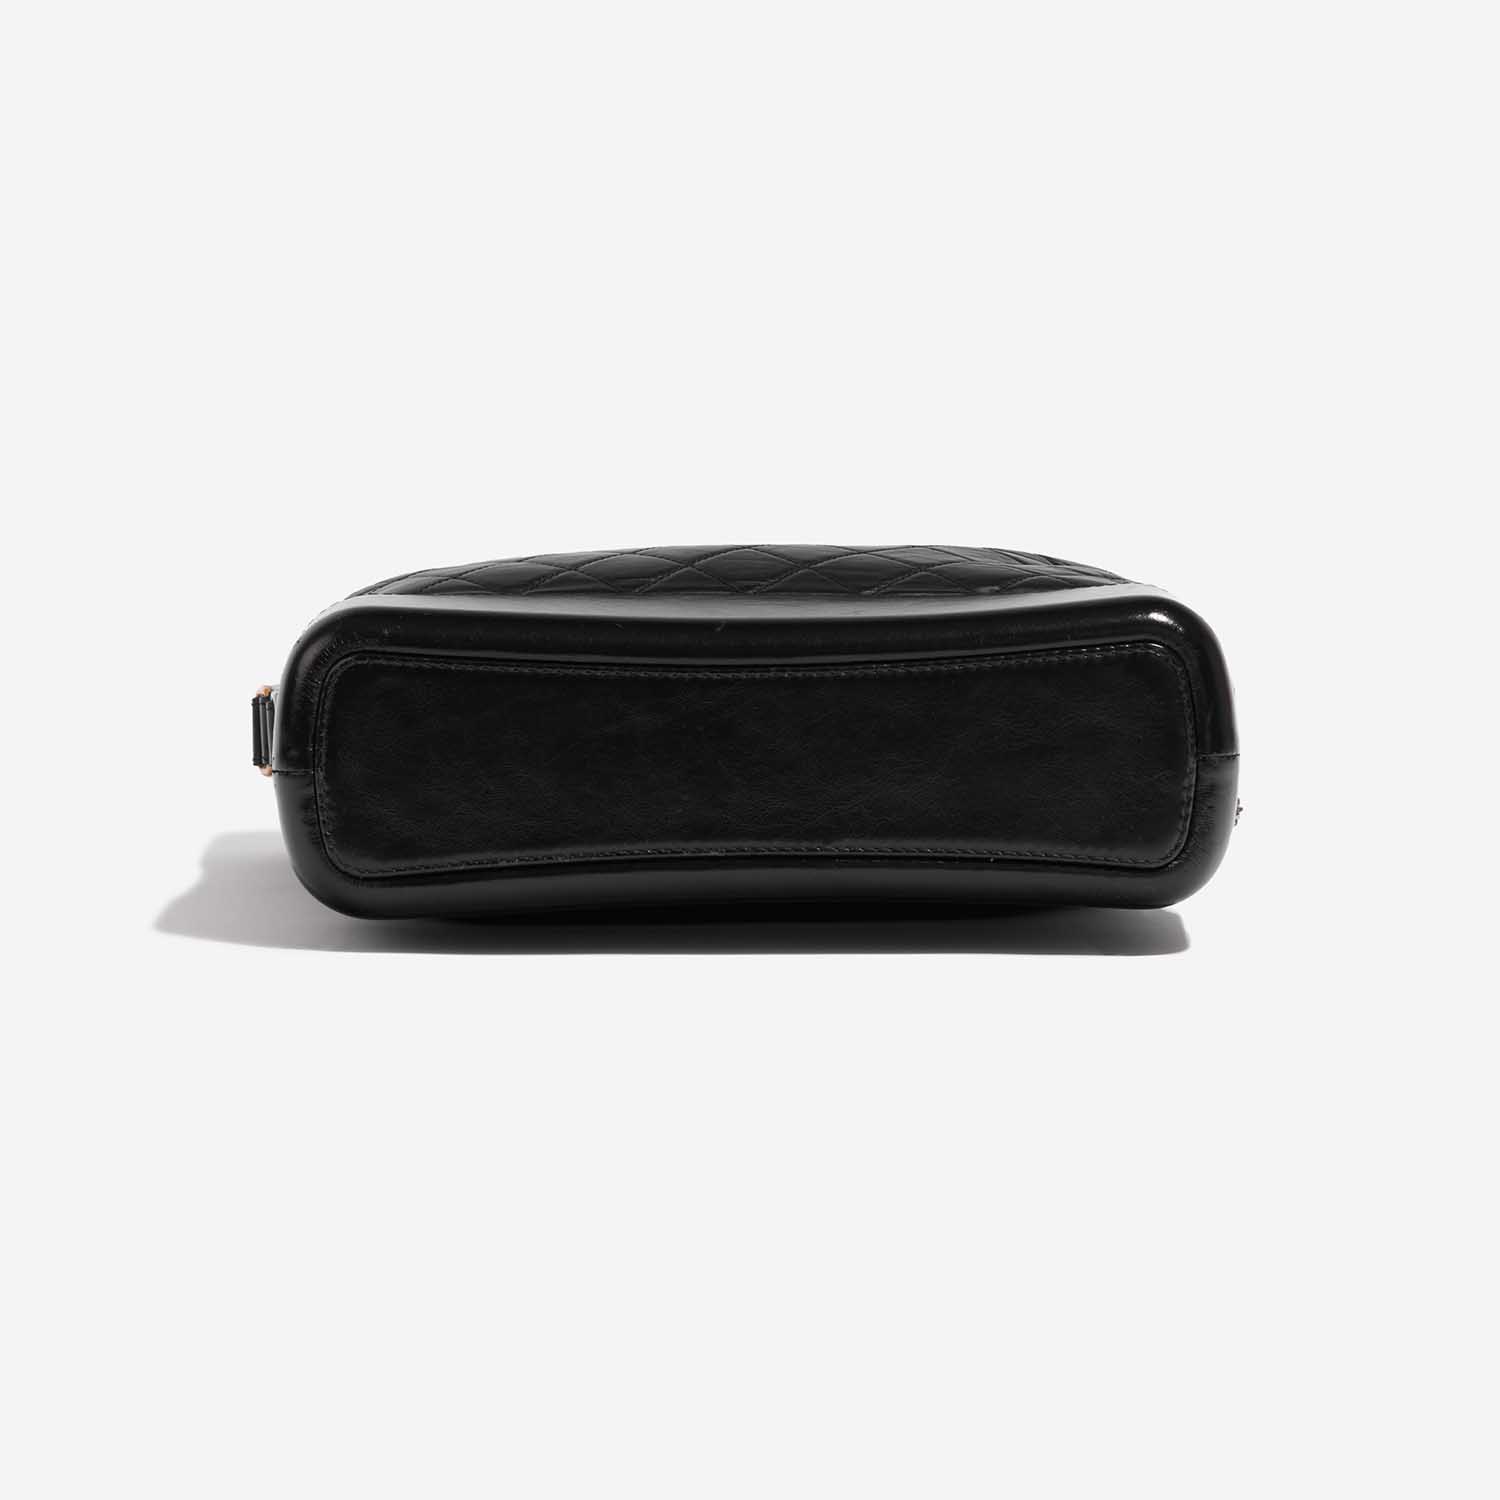 Pre-owned Chanel bag Gabrielle Large Calf Black Black Bottom | Sell your designer bag on Saclab.com